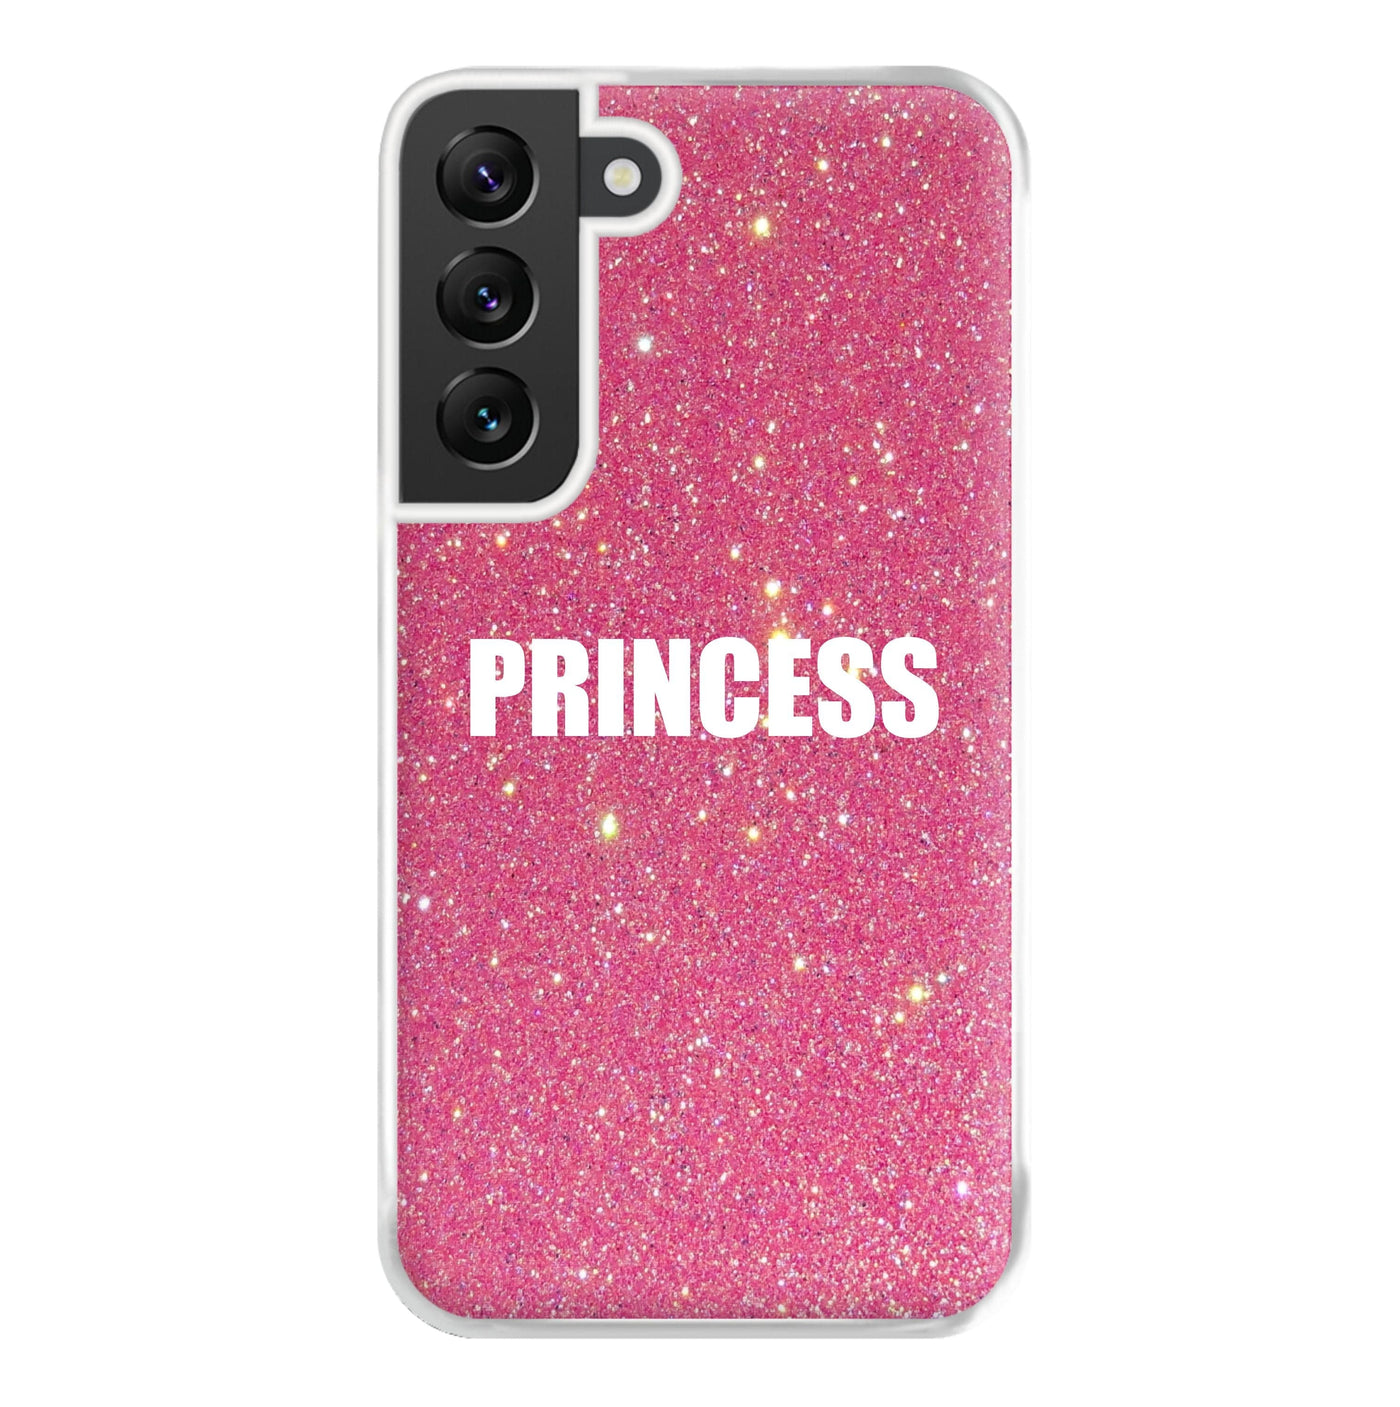 Glittery Pink Princess Phone Case